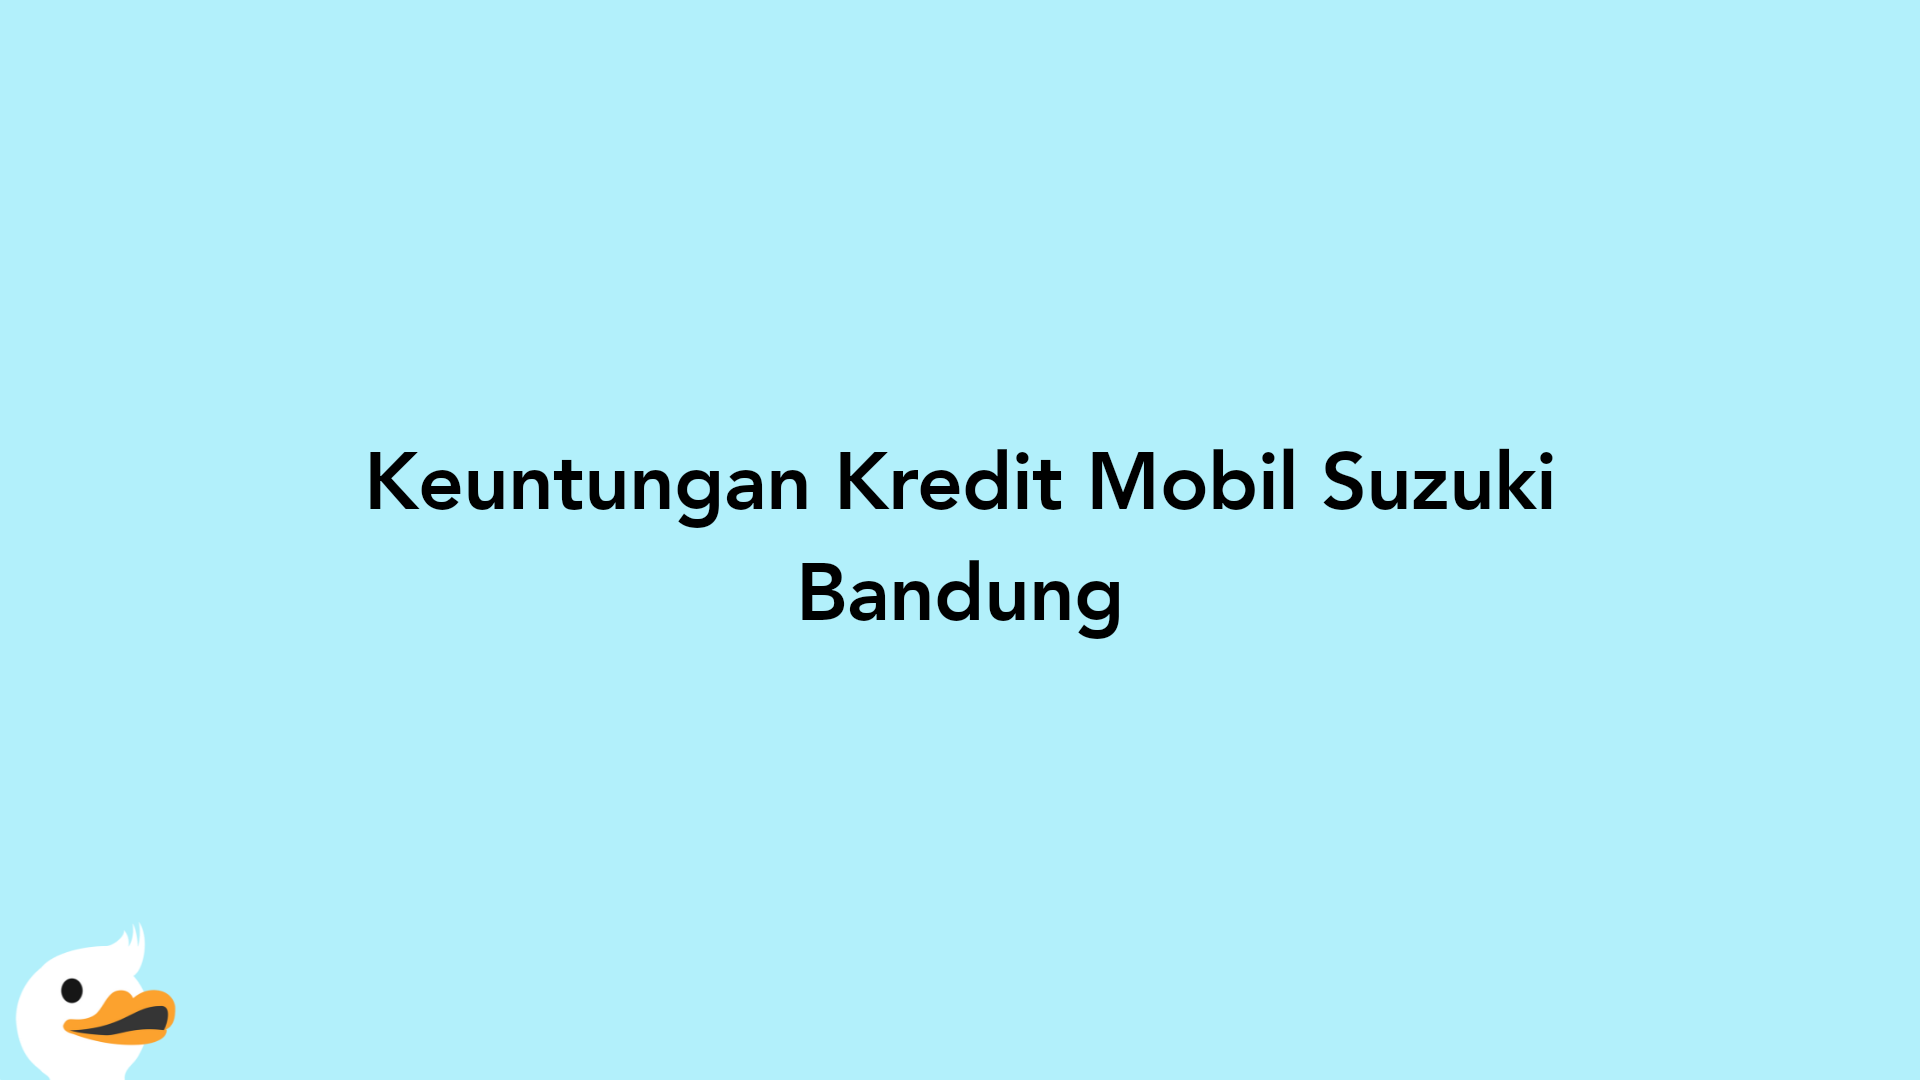 Keuntungan Kredit Mobil Suzuki Bandung